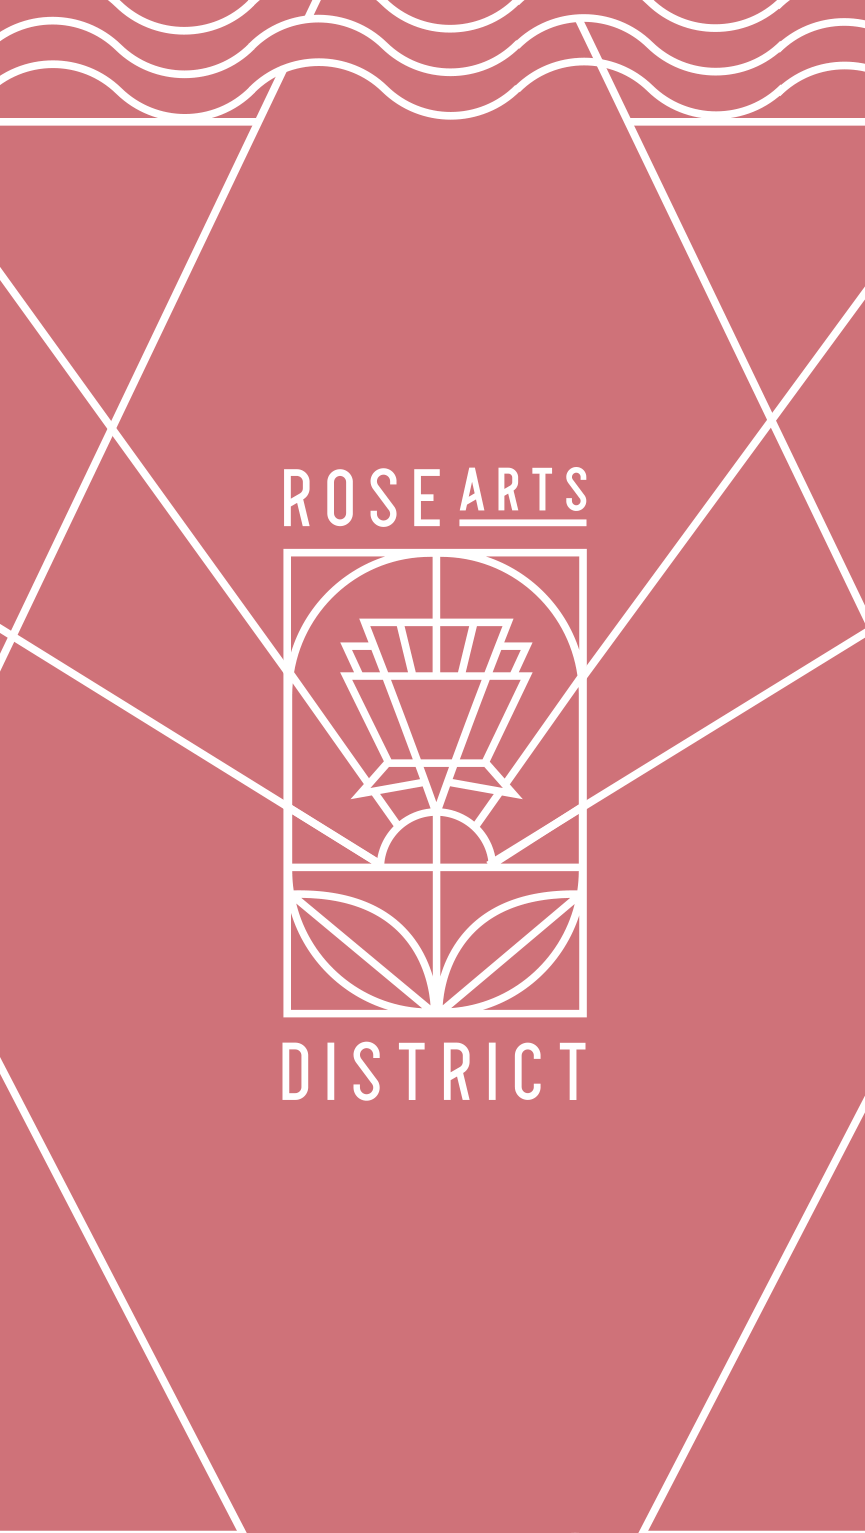 RoseArts District – Logo Design by Prismatic, Orlando Design Agency